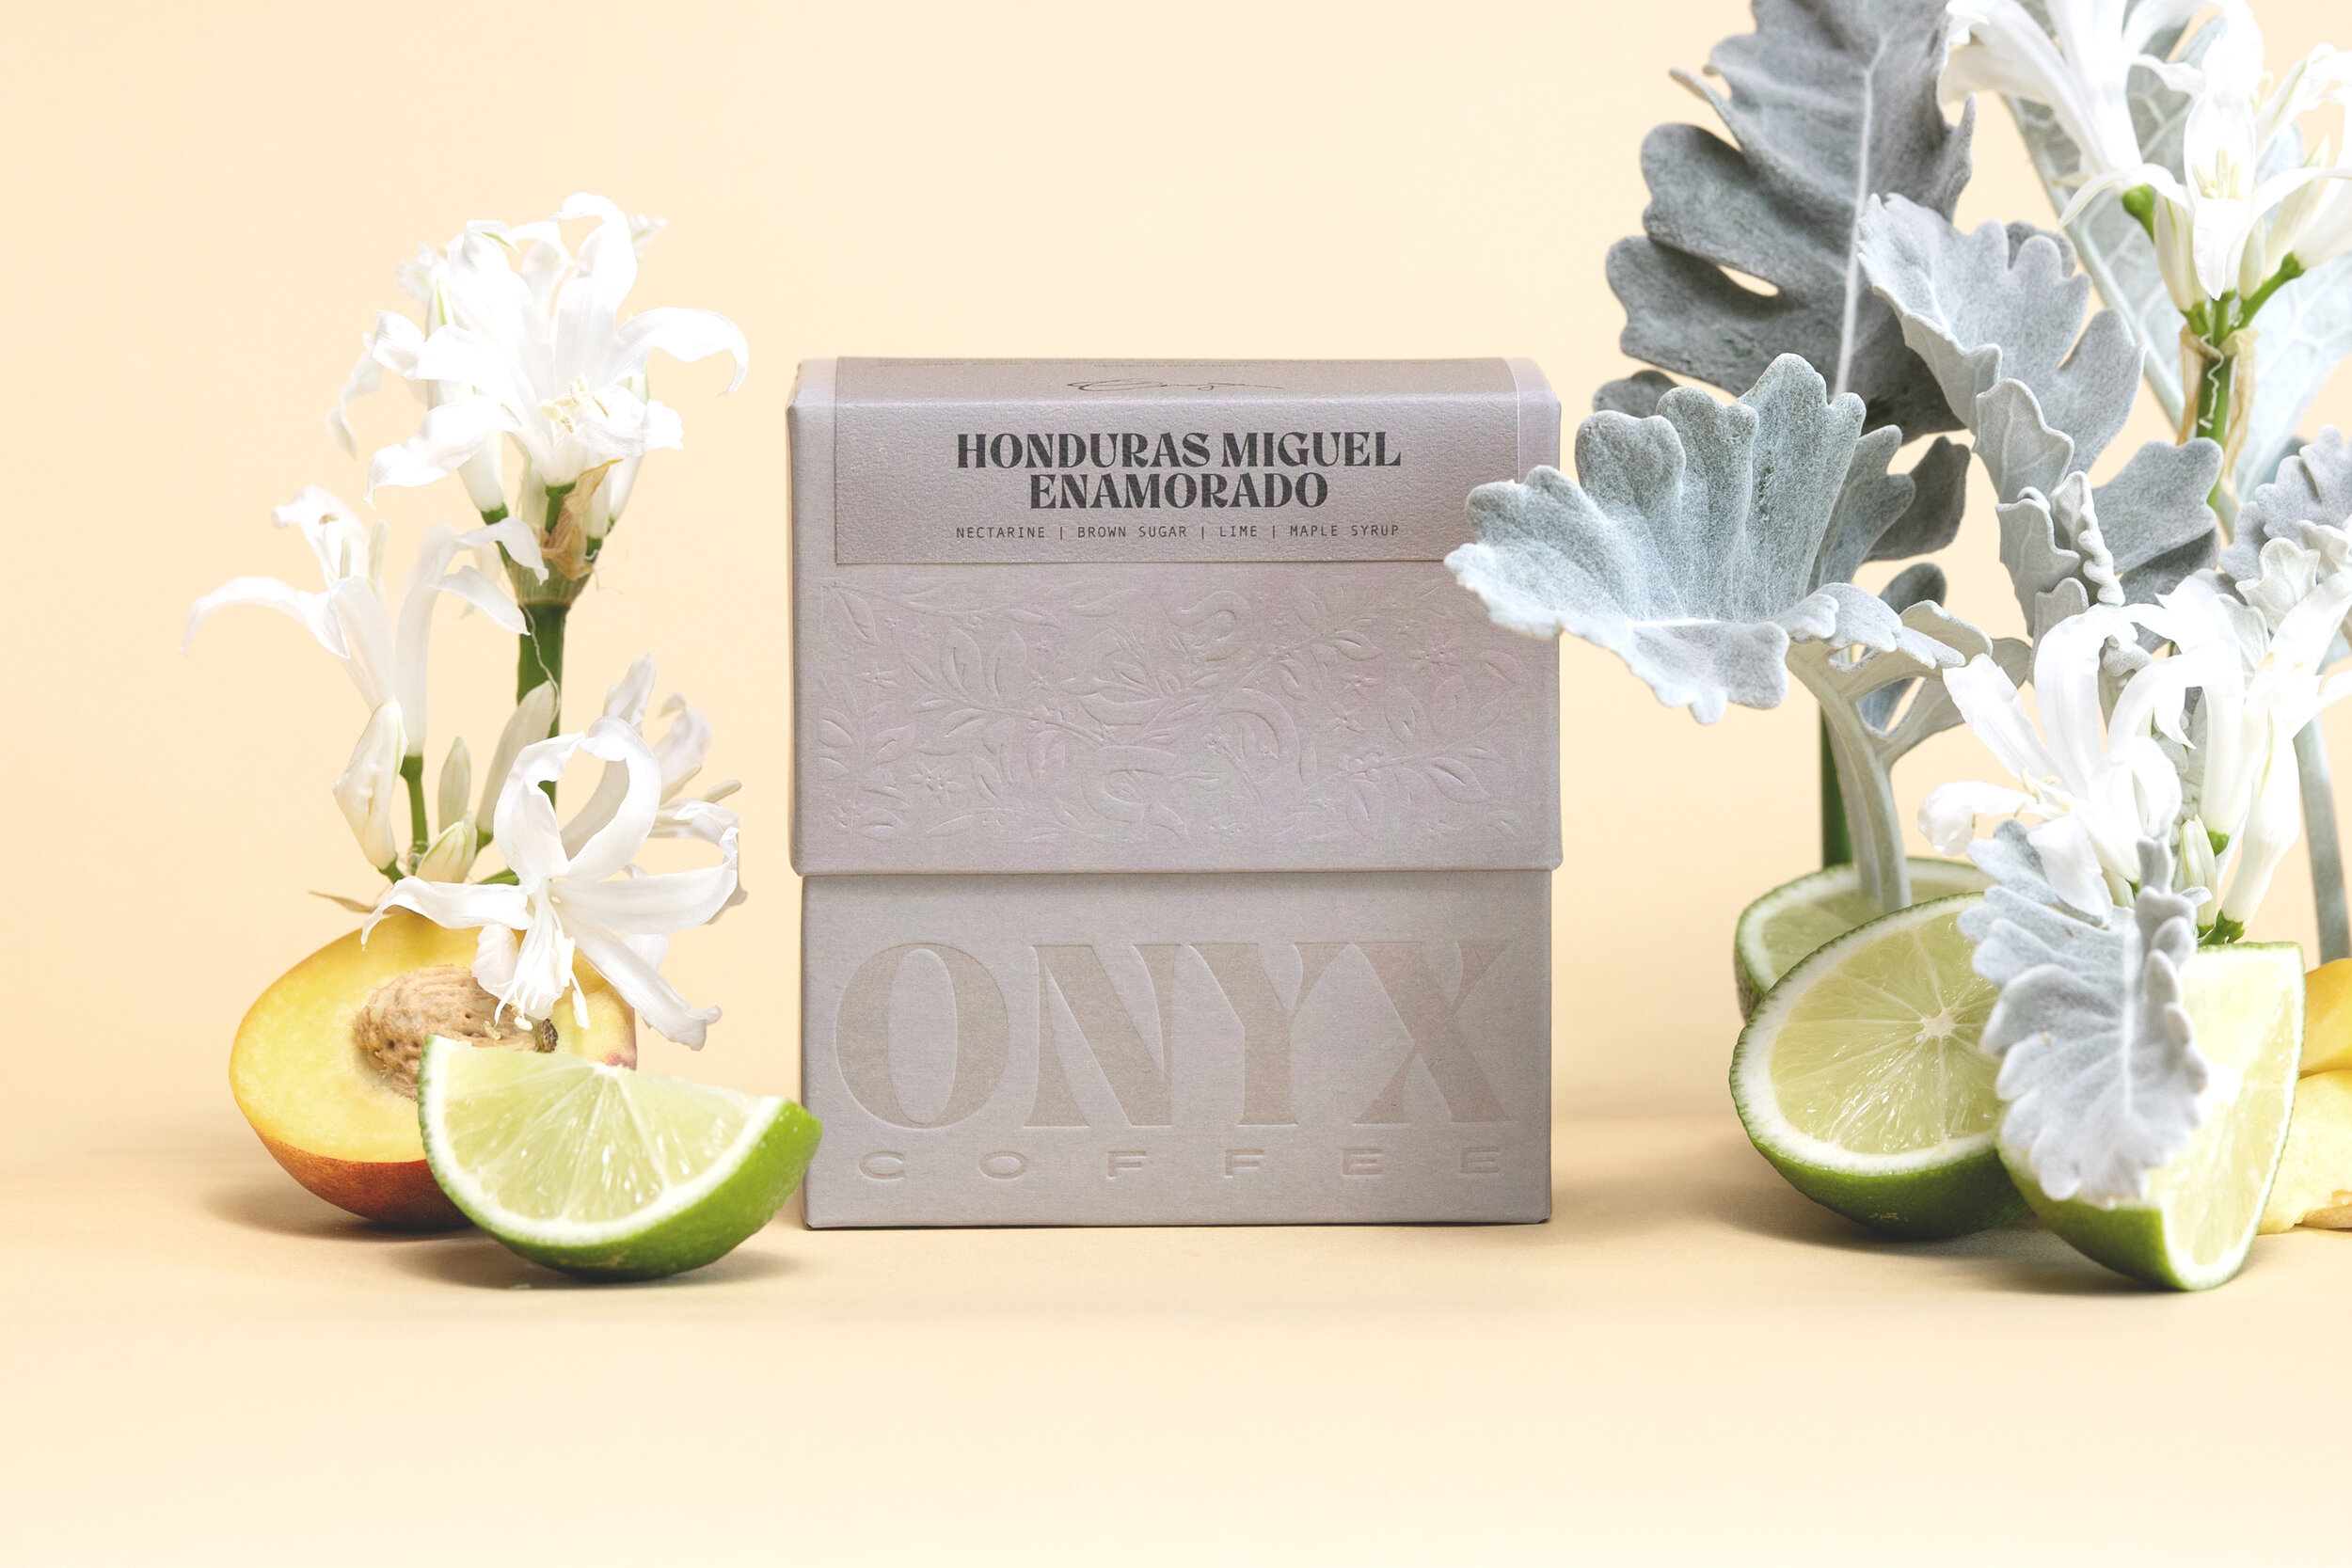 Onyx Coffee Lab Roasters Choice Packaging